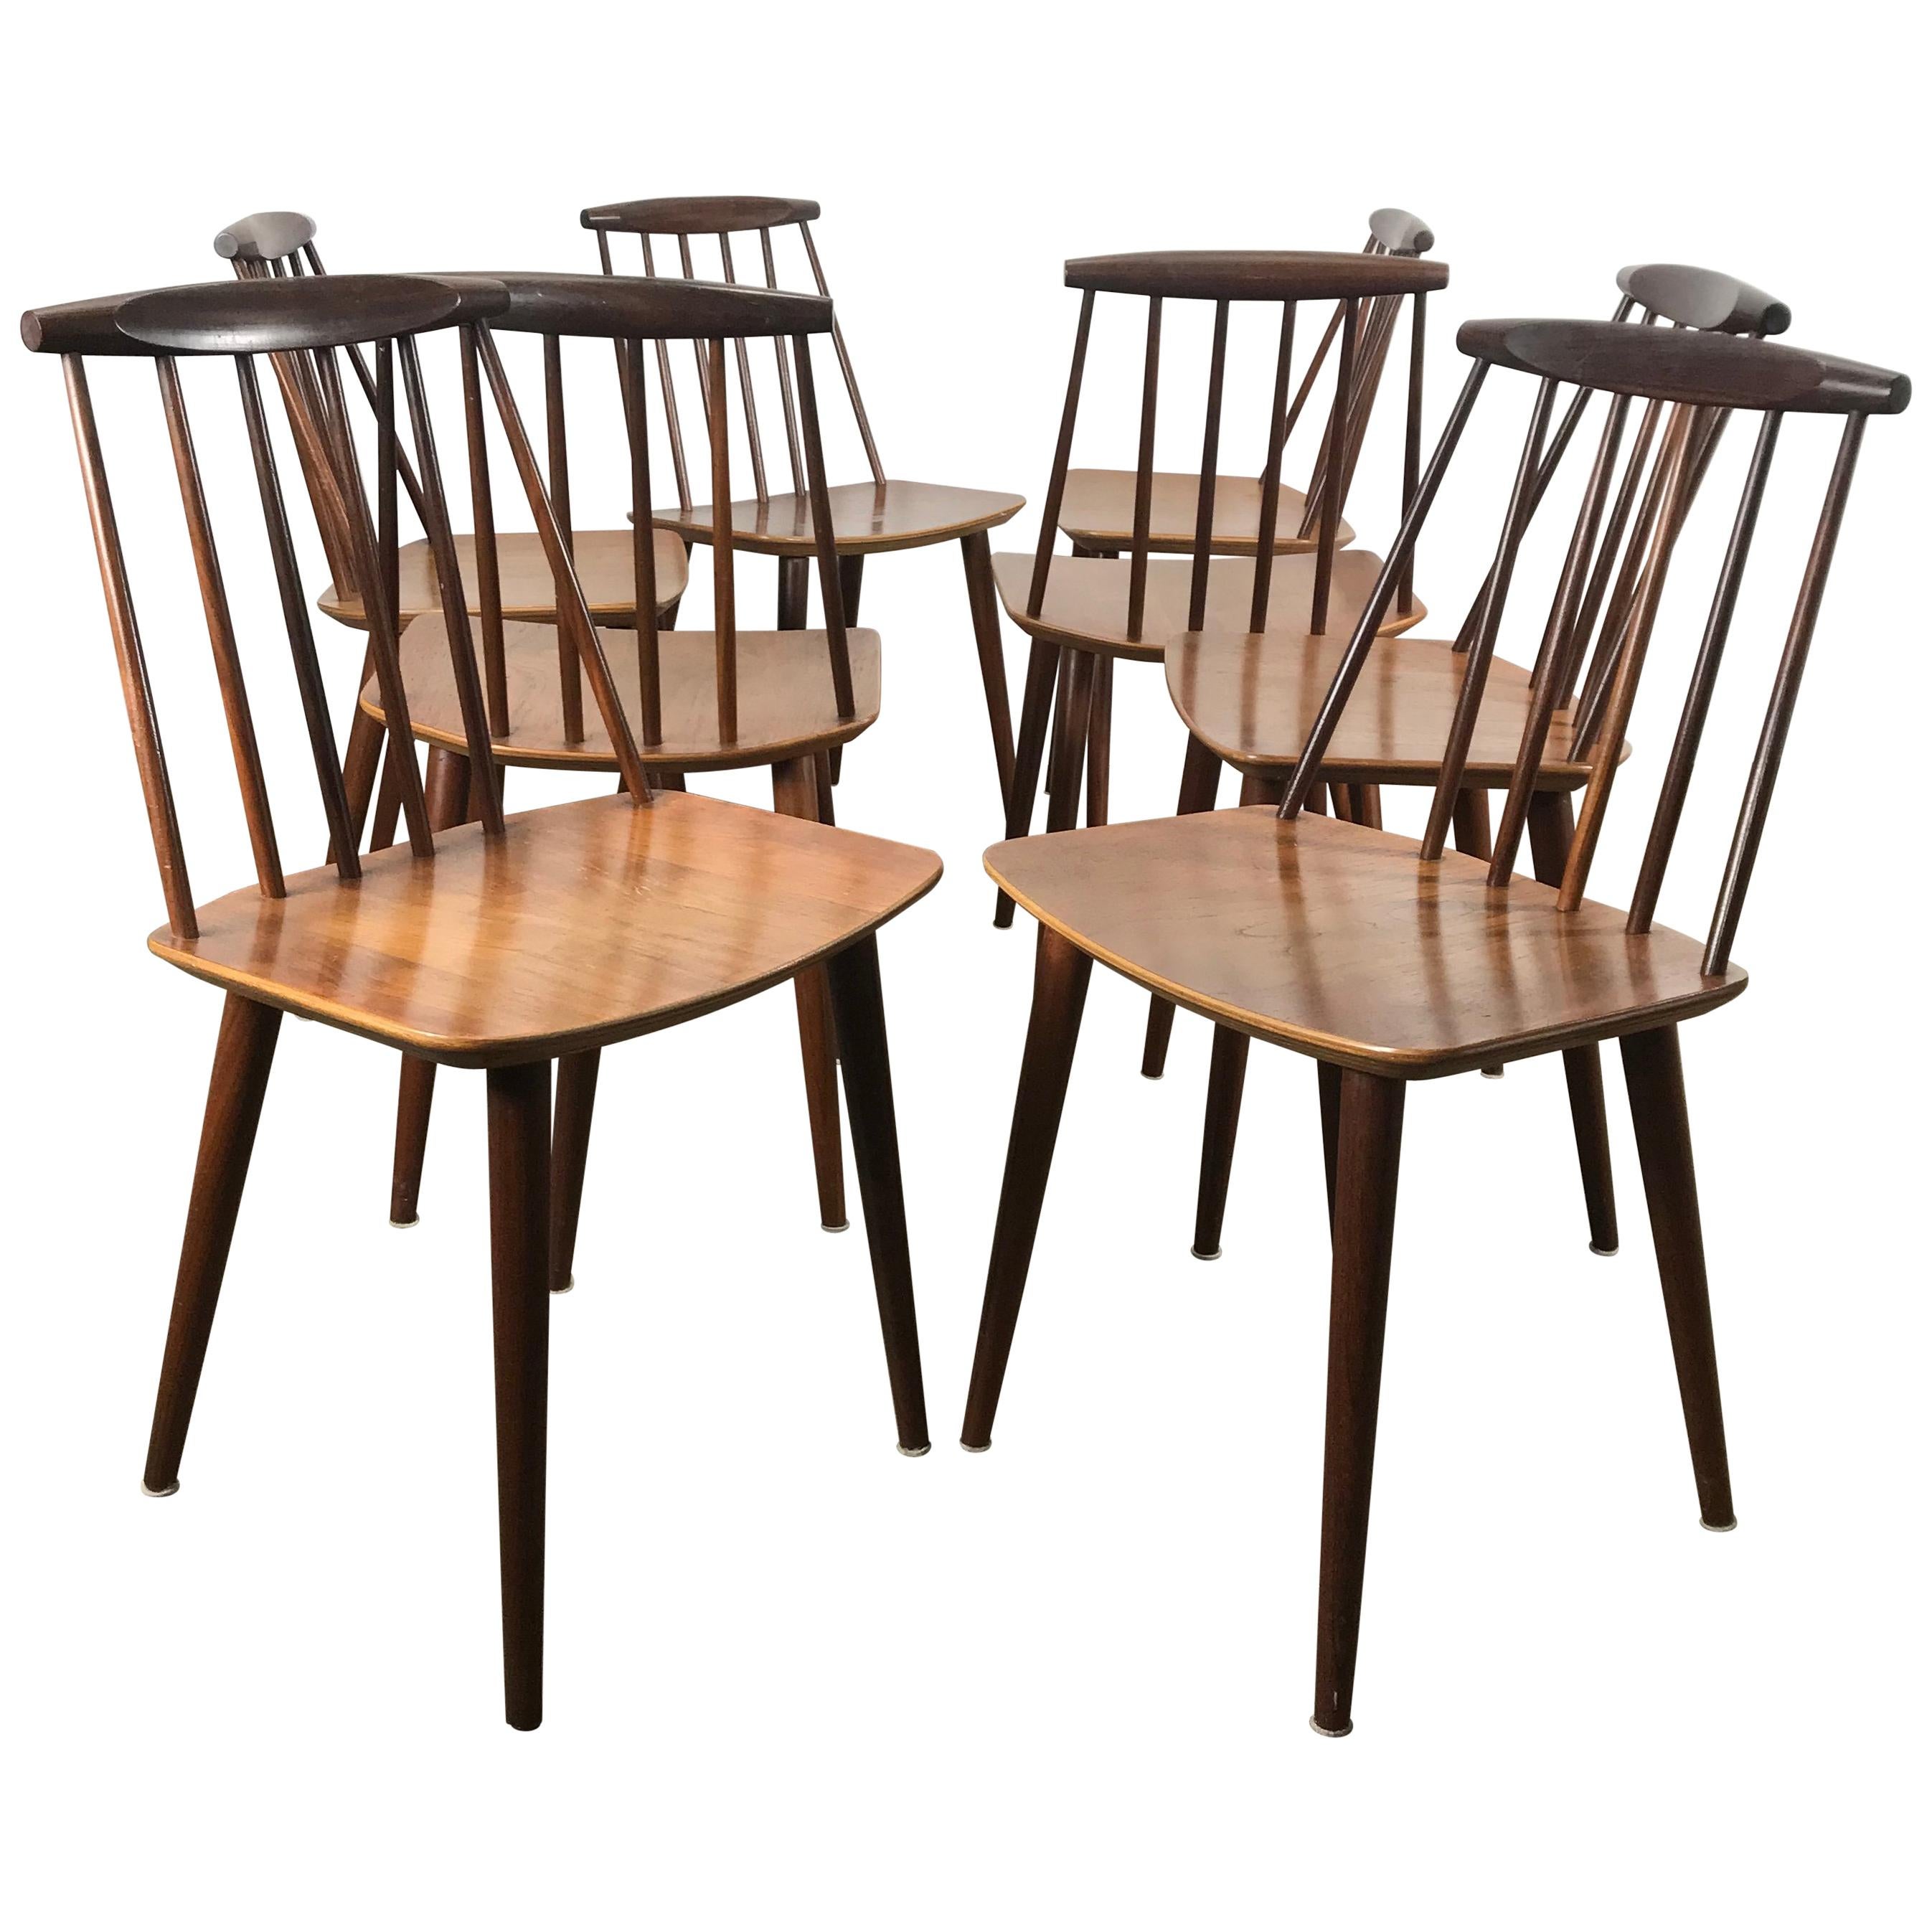 Set of 8 Stick Chairs Denmark, Mobler J77, Folke Palsson for FDB Mobler